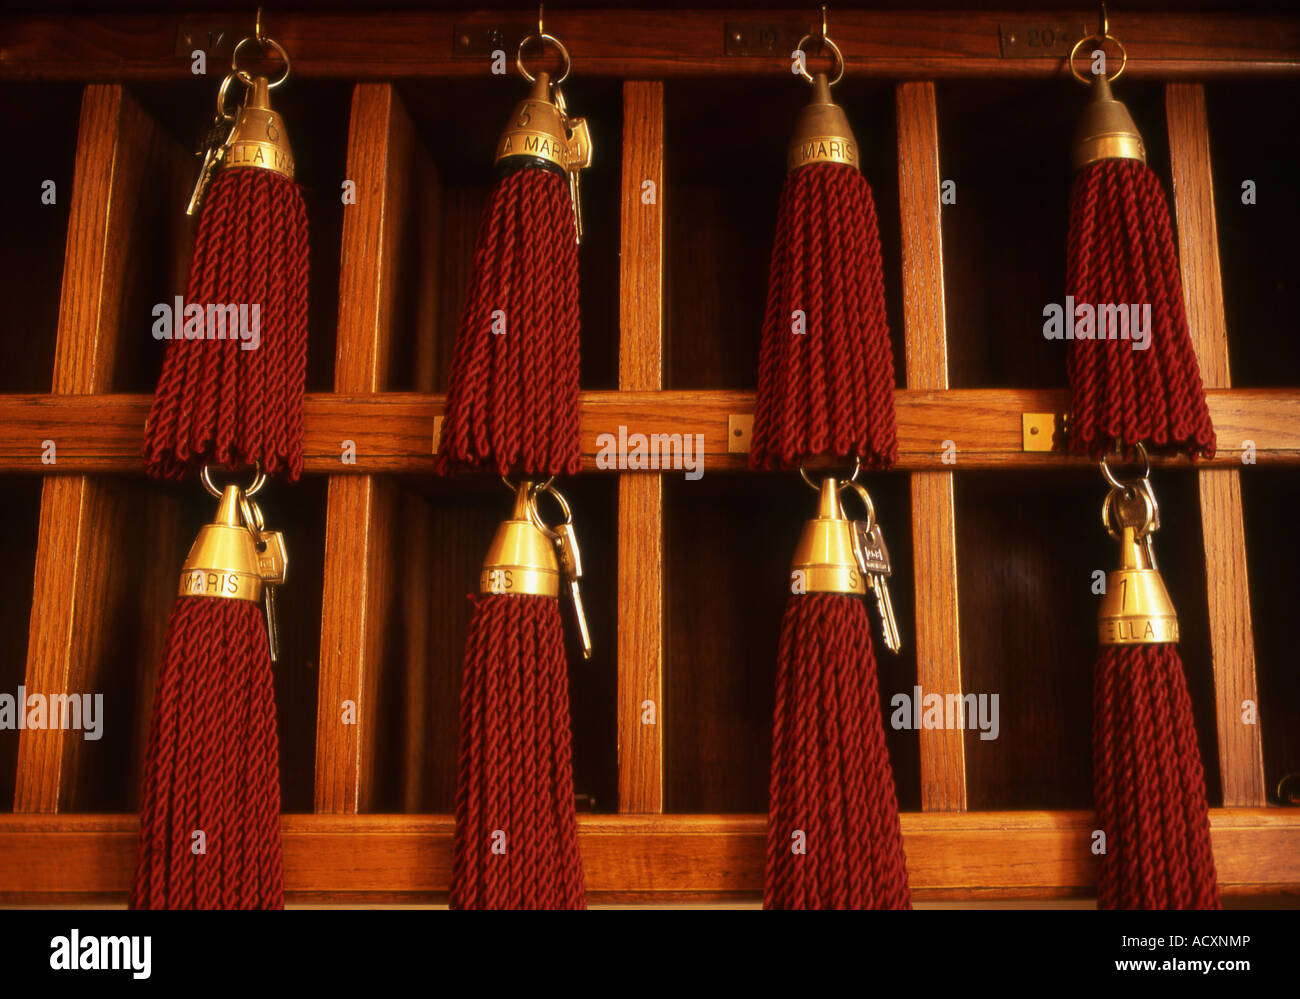 Antique Room Keys with Tassels at the Hotel Stella Maris, Levanto, Liguria, Italy Stock Photo